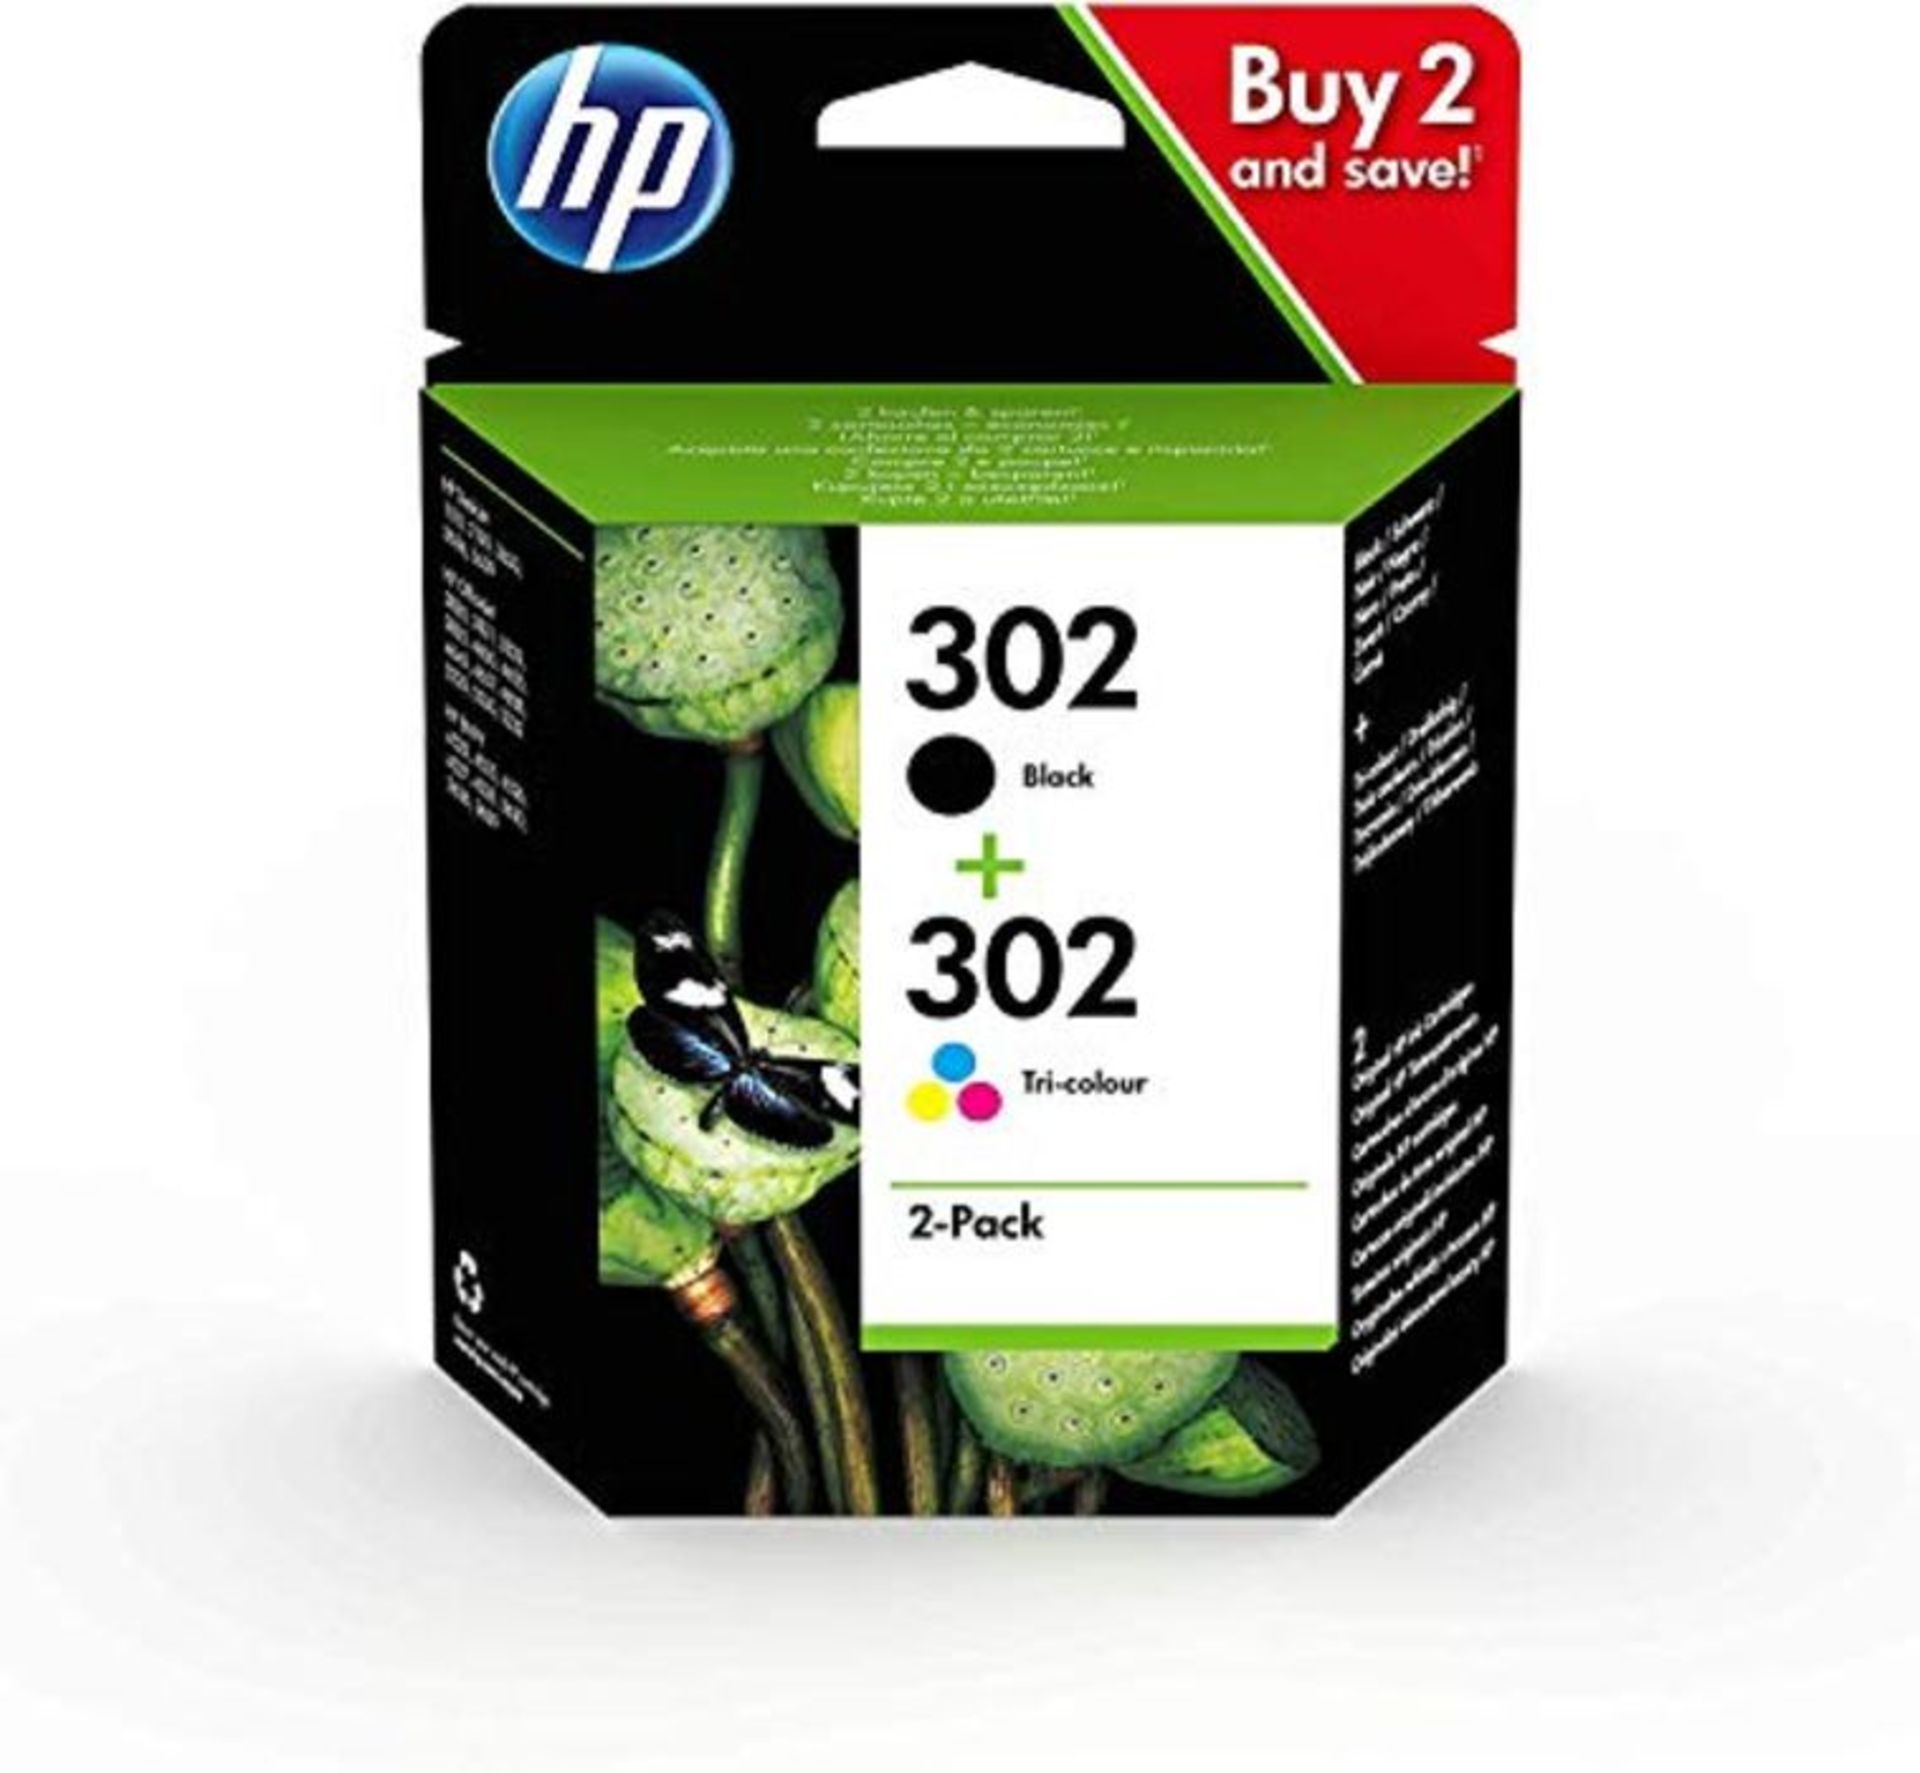 HP X4D37AE 302 Original Ink Cartridges, Black and Tri-color, Multipack - Image 3 of 4